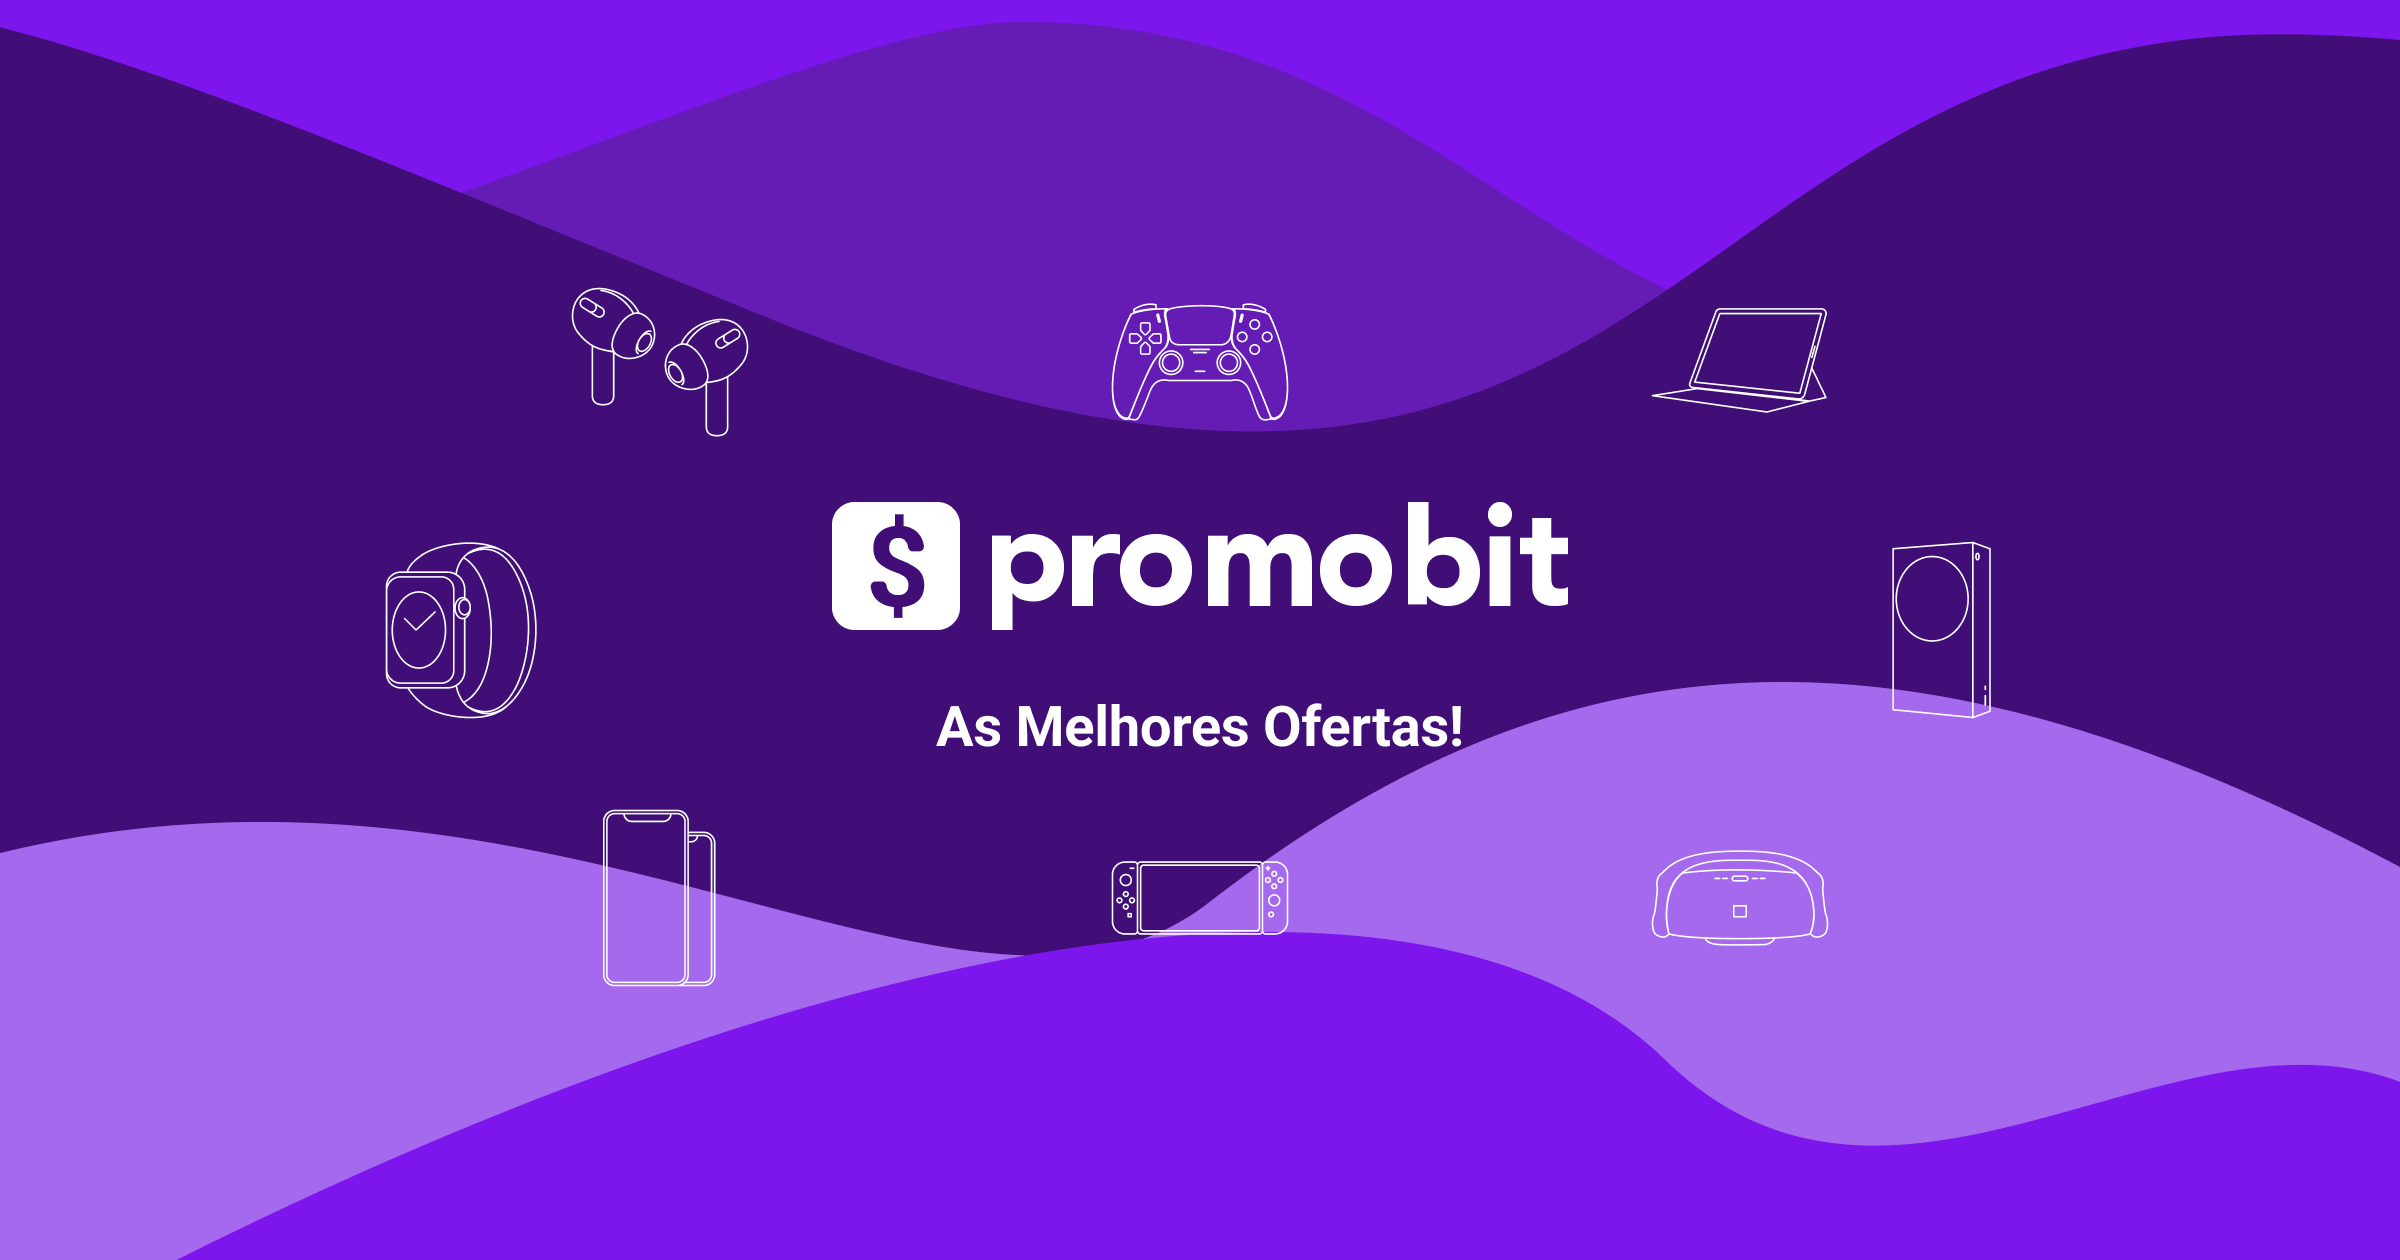 www.promobit.com.br